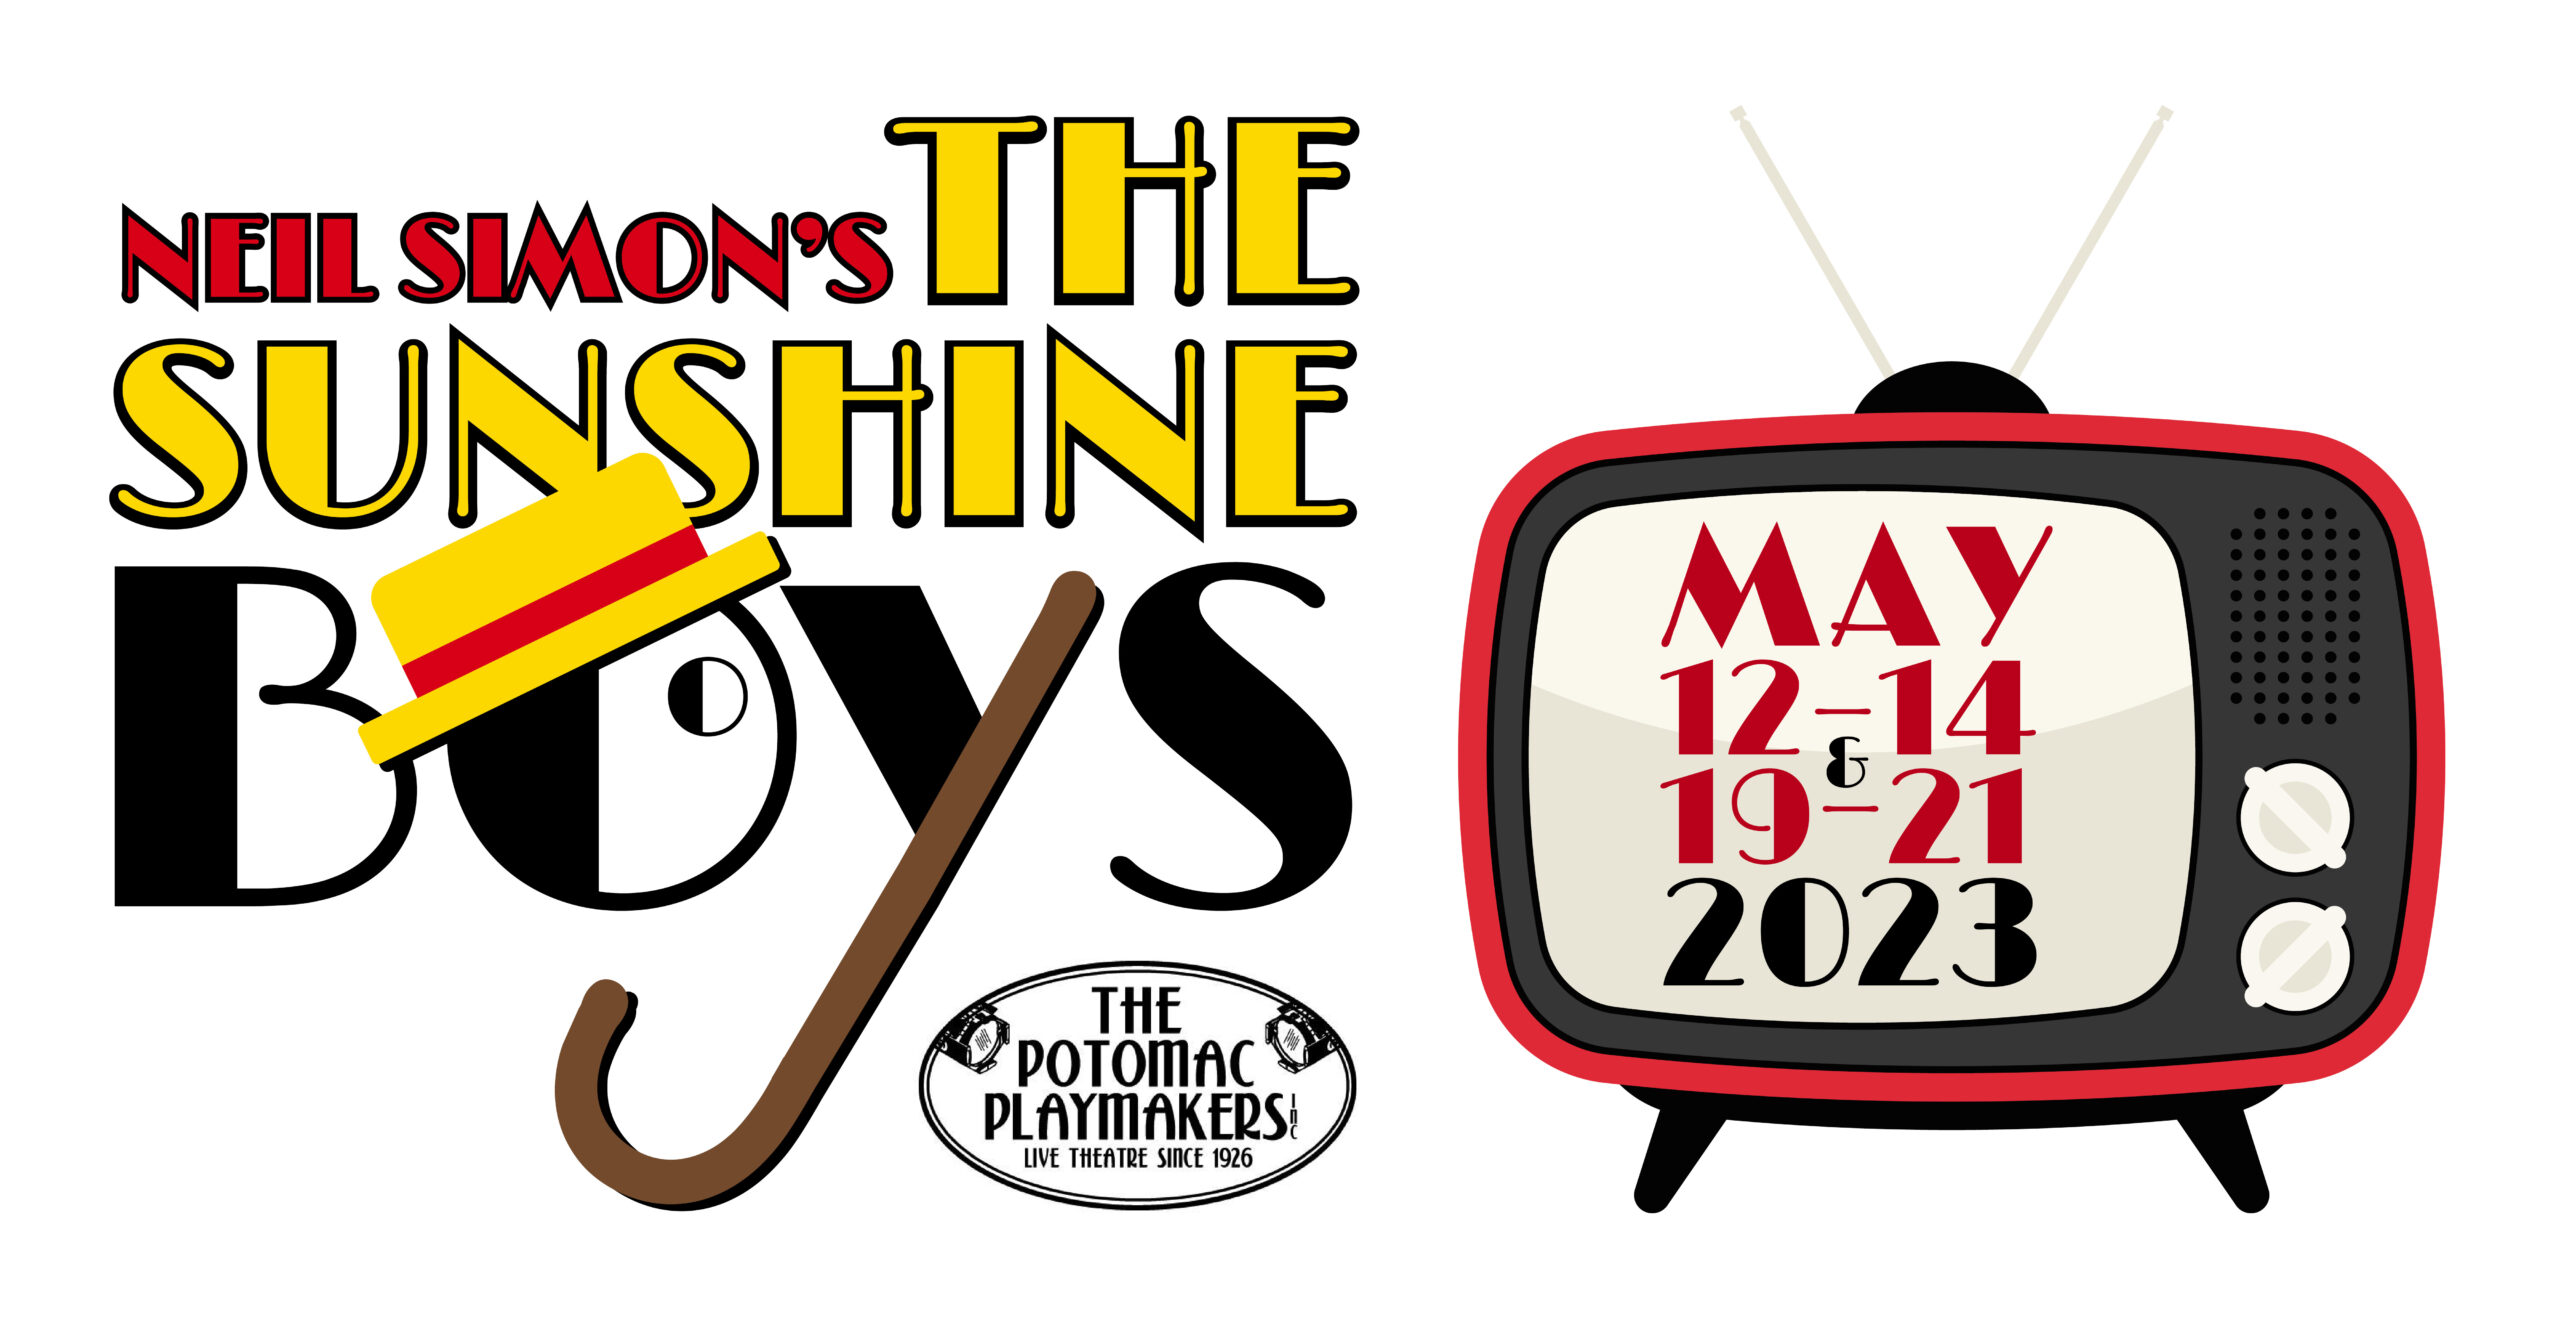 Auditions for Neil Simon’s “The Sunshine Boys” Feb 19 & 20, 2023